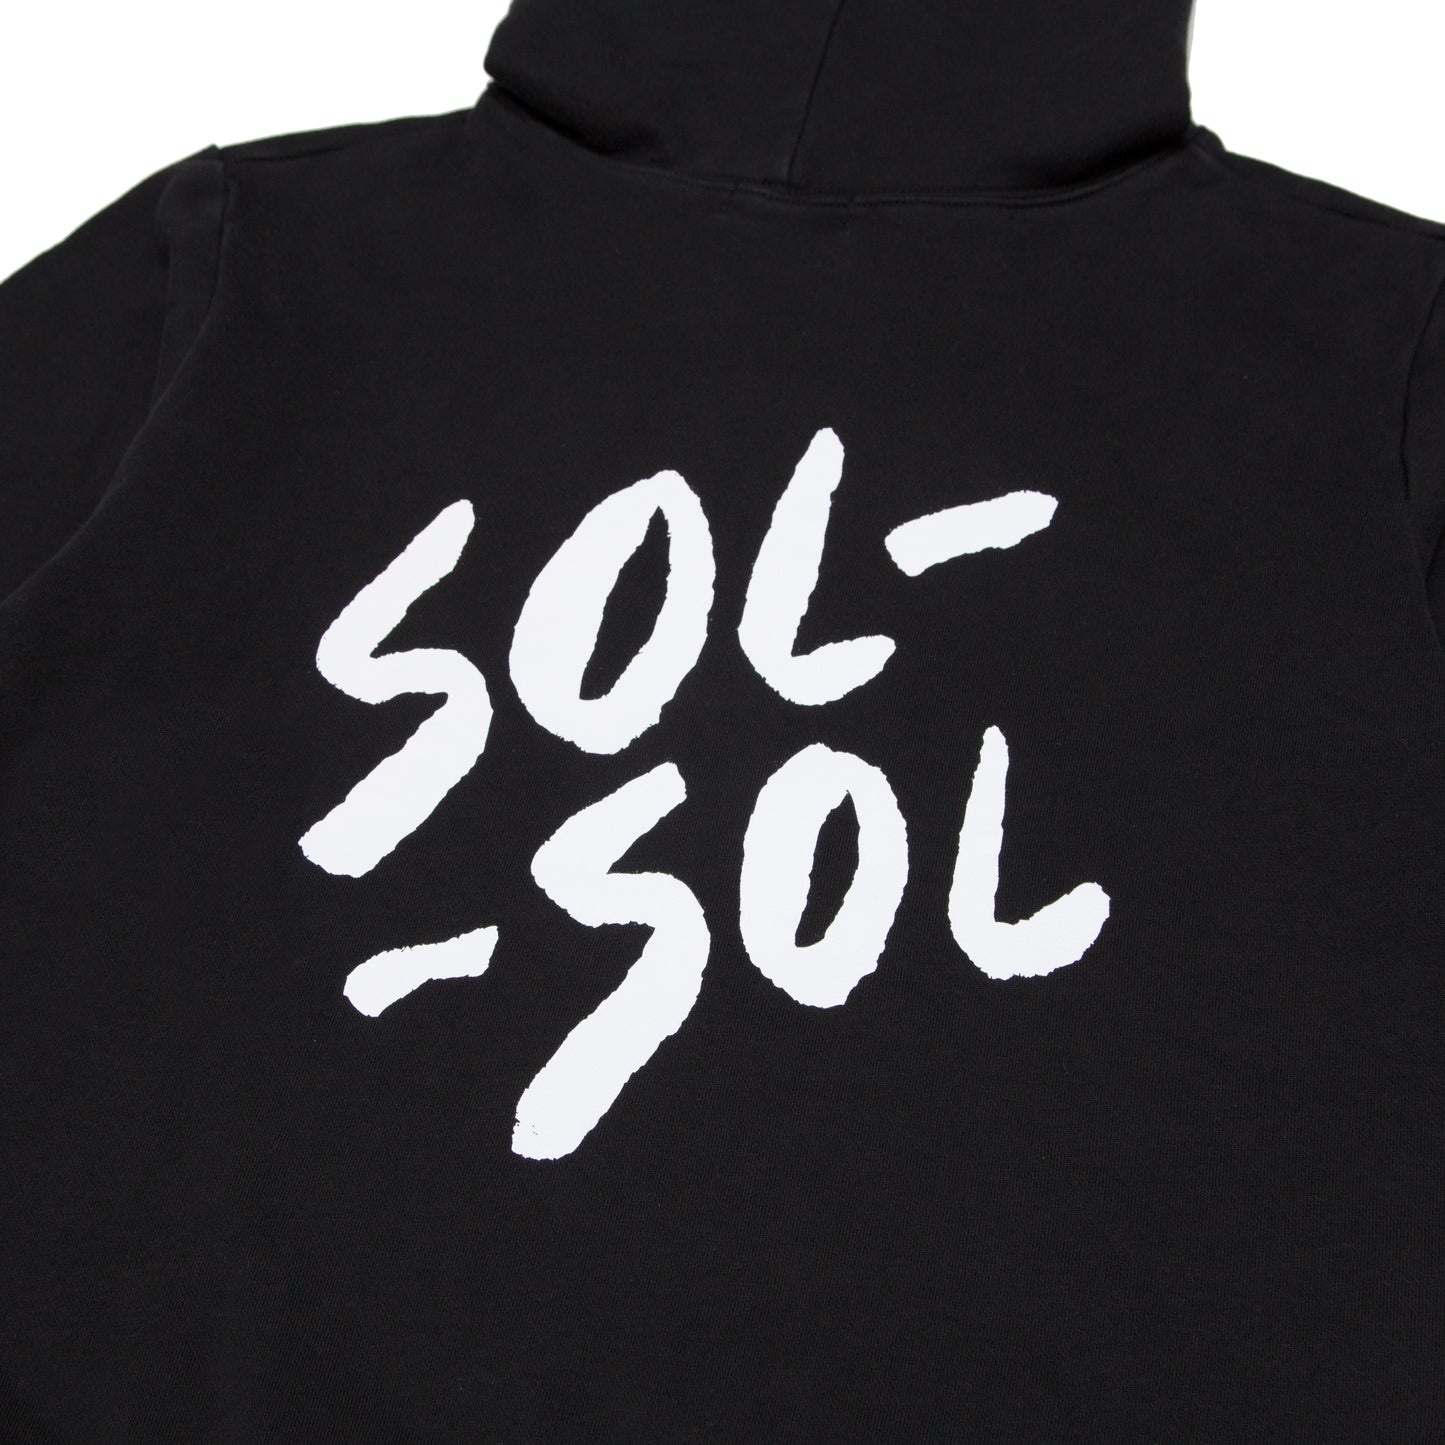 Sol Sol Classic Logo Hoodie - Washed Black